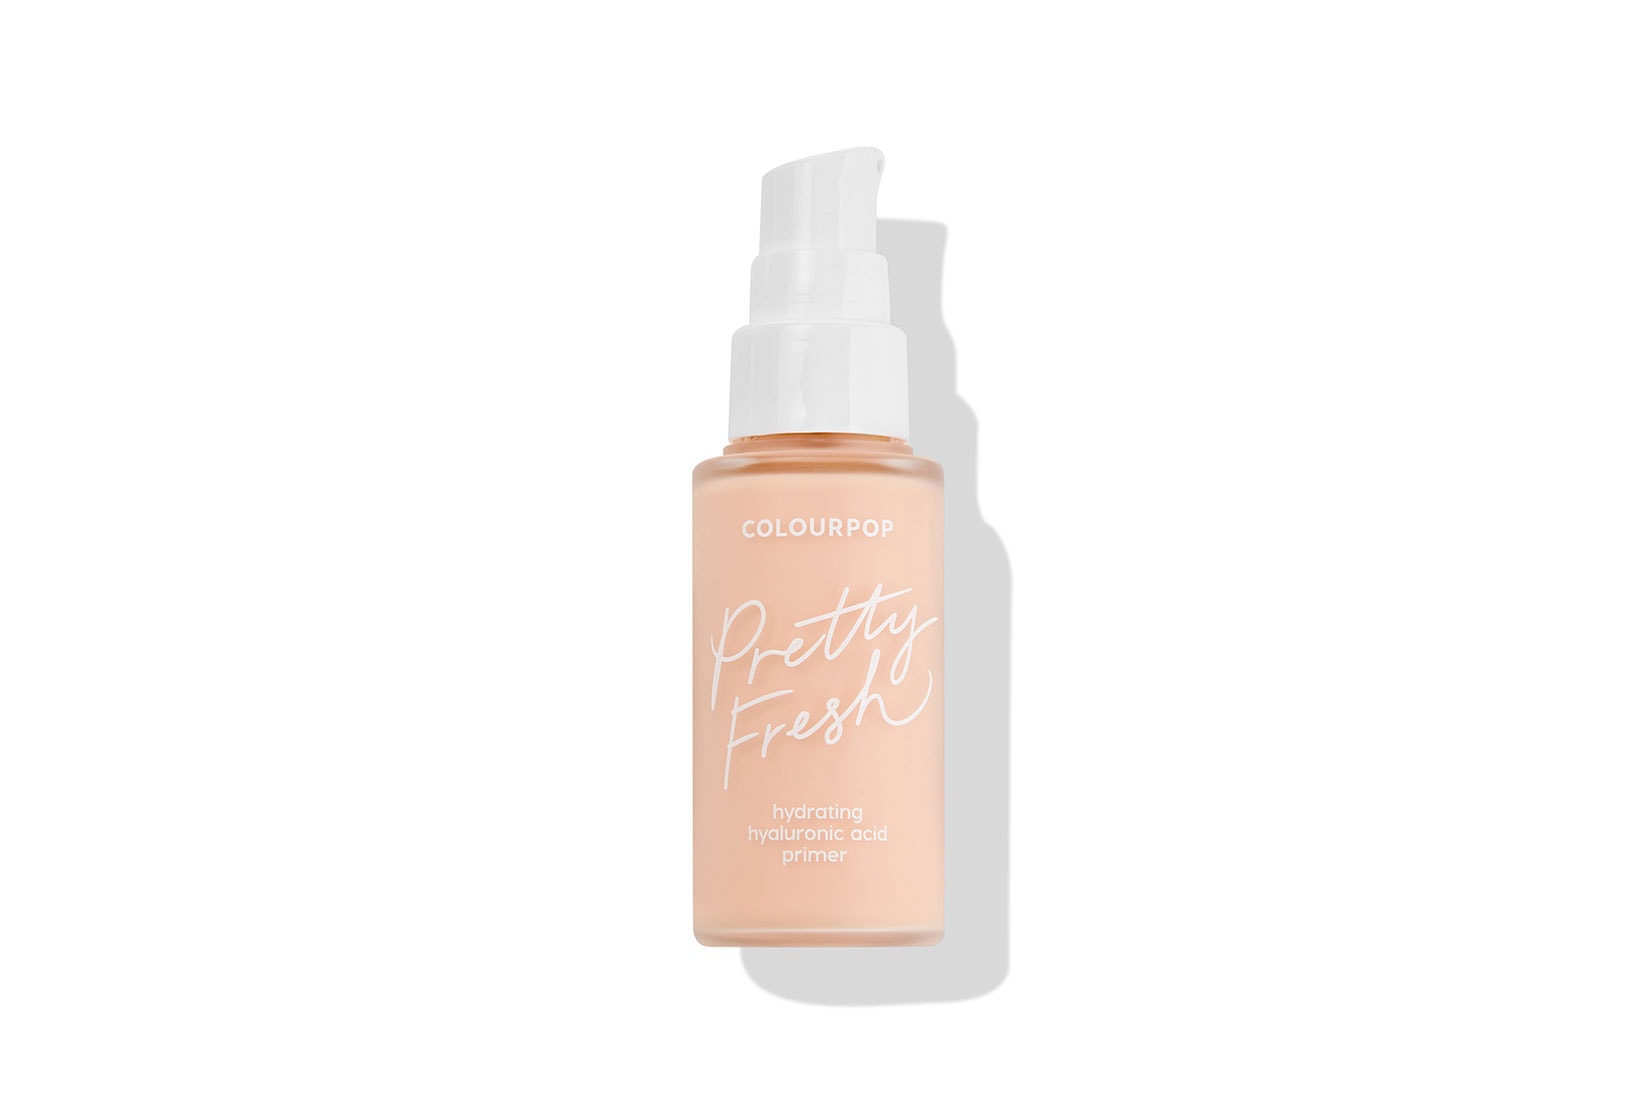 colourpop tinted moisturizer hydrating primer setting mist blending sponge makeup release beauty cosmetics